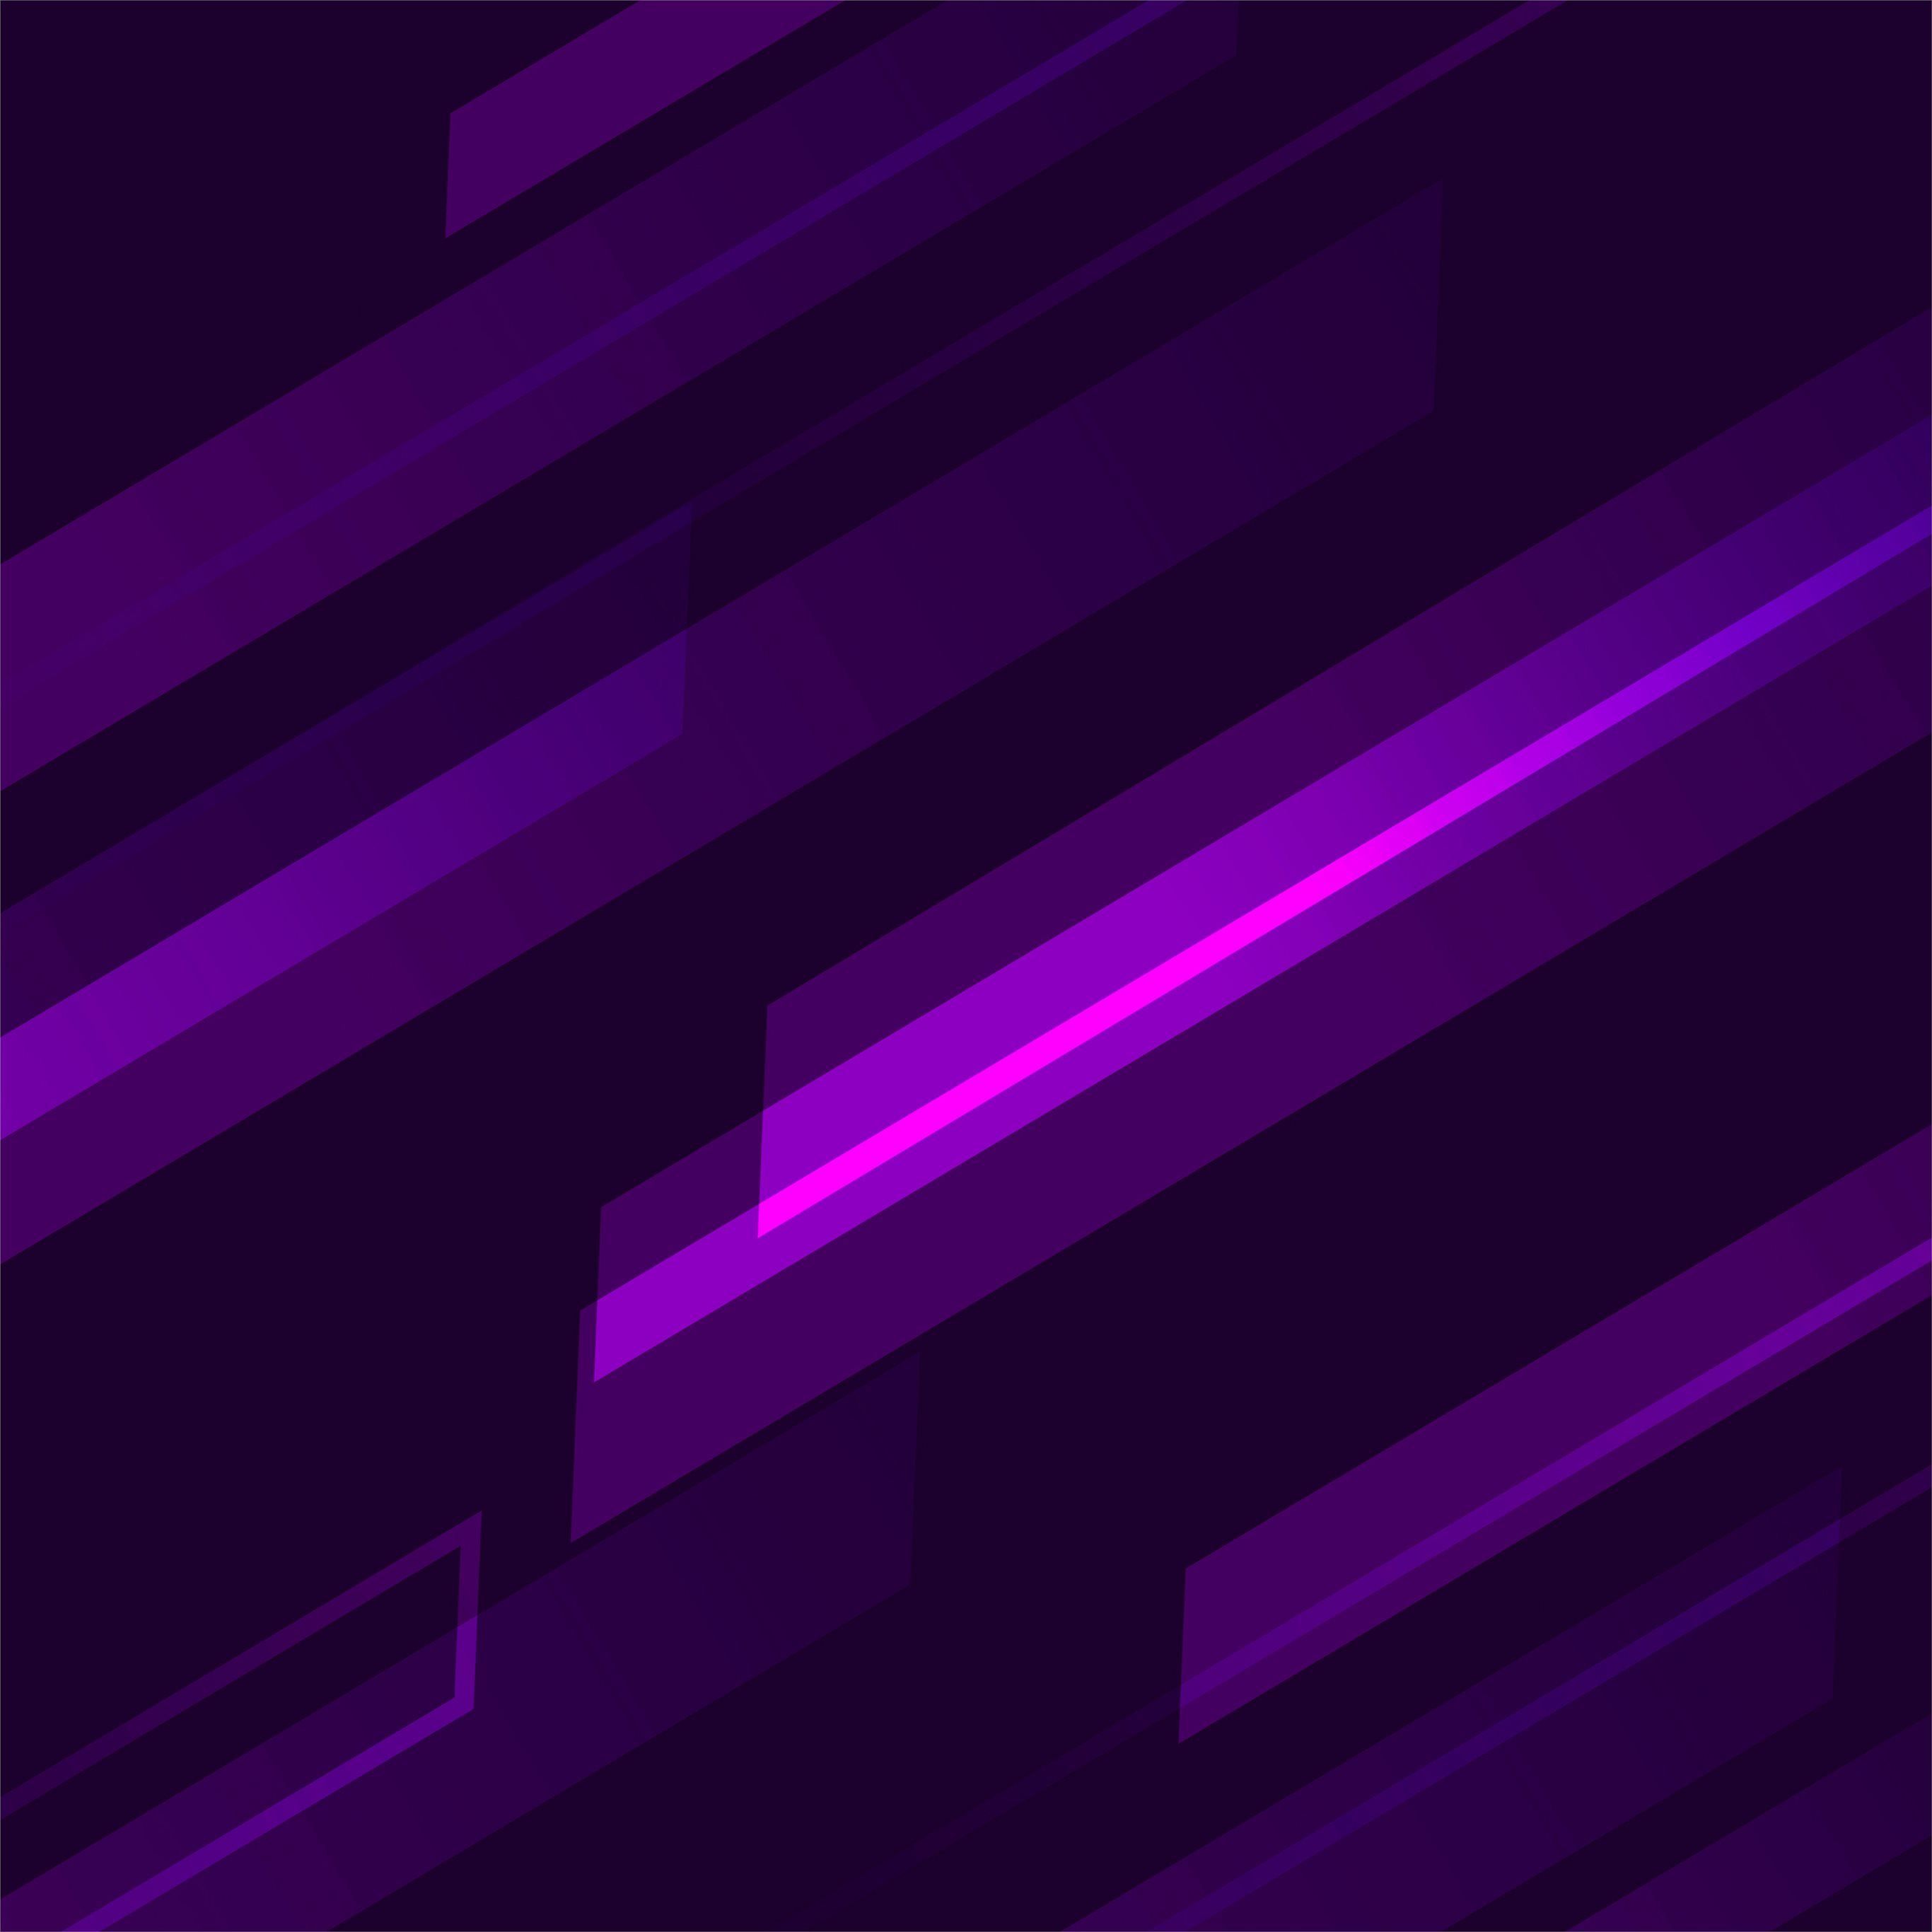 A dark purple abstract image with horizontal lines. - Dark purple